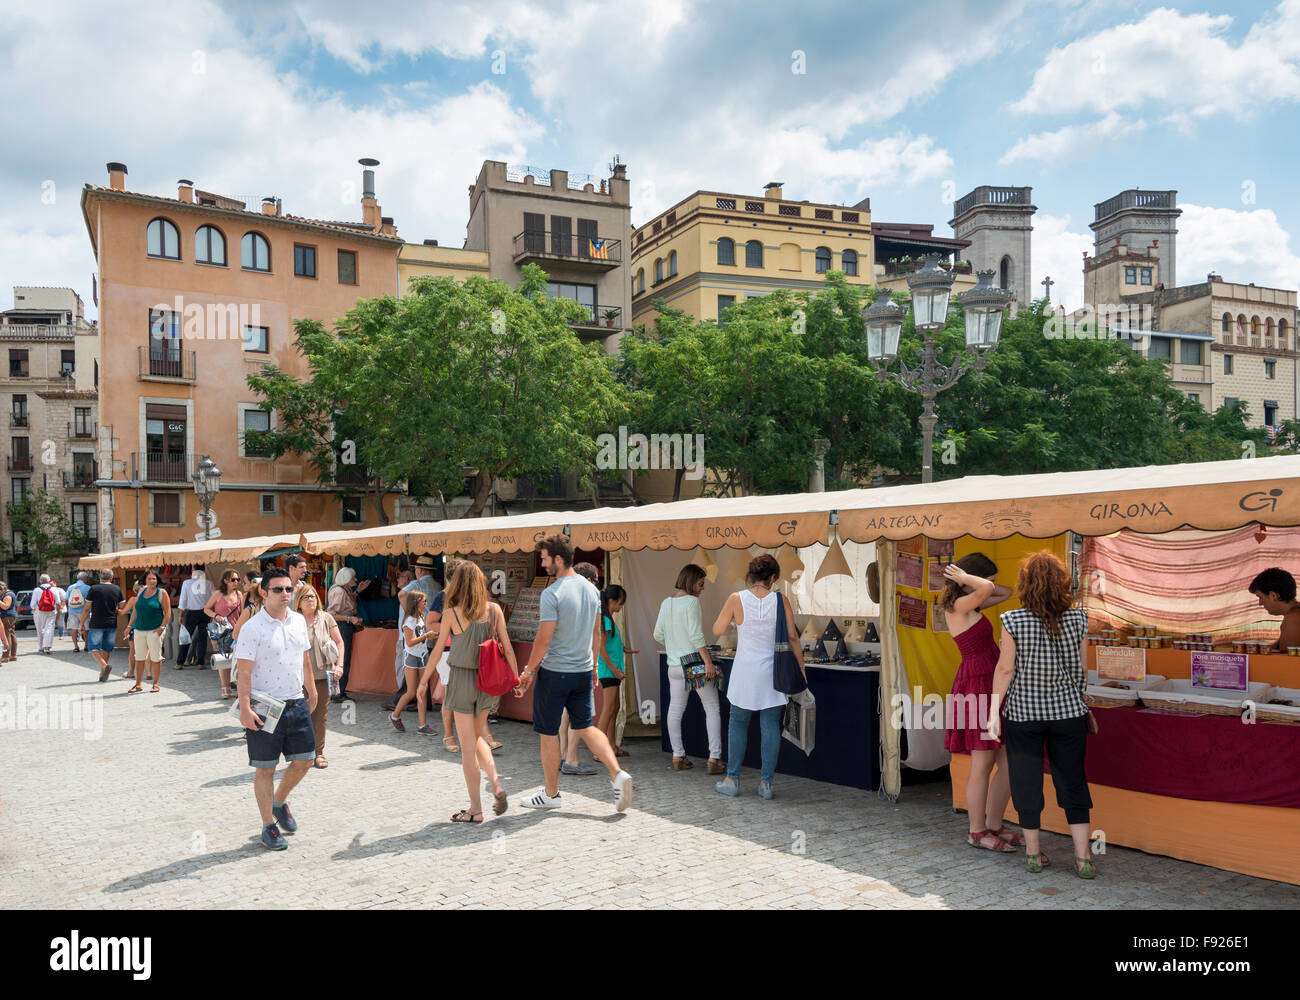 Althergebrachten Markt am Pont de Pedra, Old Town, Girona (Gerona), Provinz Girona, Katalonien, Spanien Stockfoto